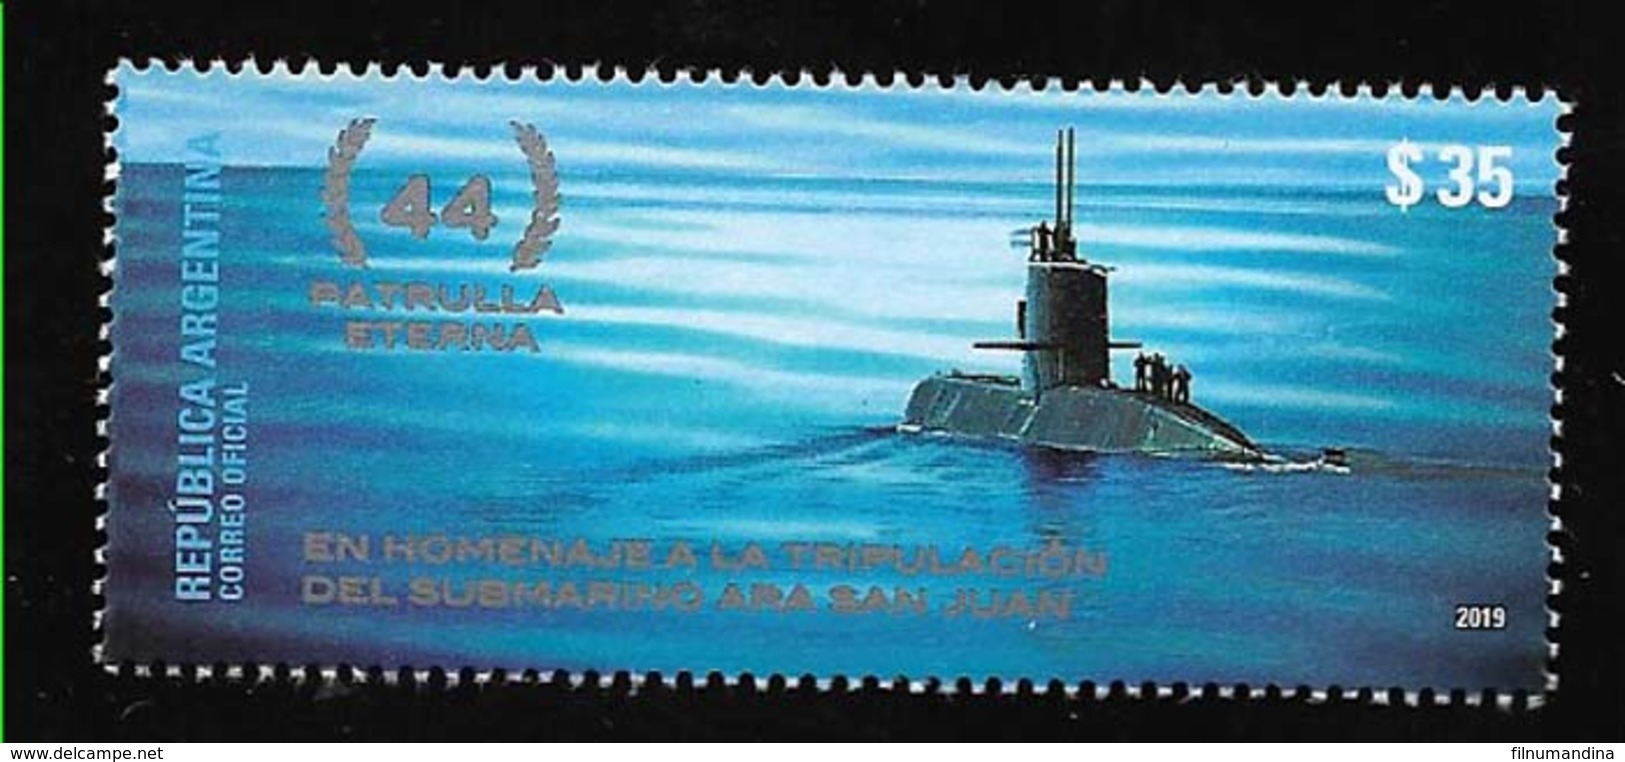 FF50-ARGENTINA,ARGENTINE 2019 SHIP SOUS-MARINS SUBMARINE WRECK ARA SAN JUAN NEUF,MNH,POSTFRISCH - Unused Stamps